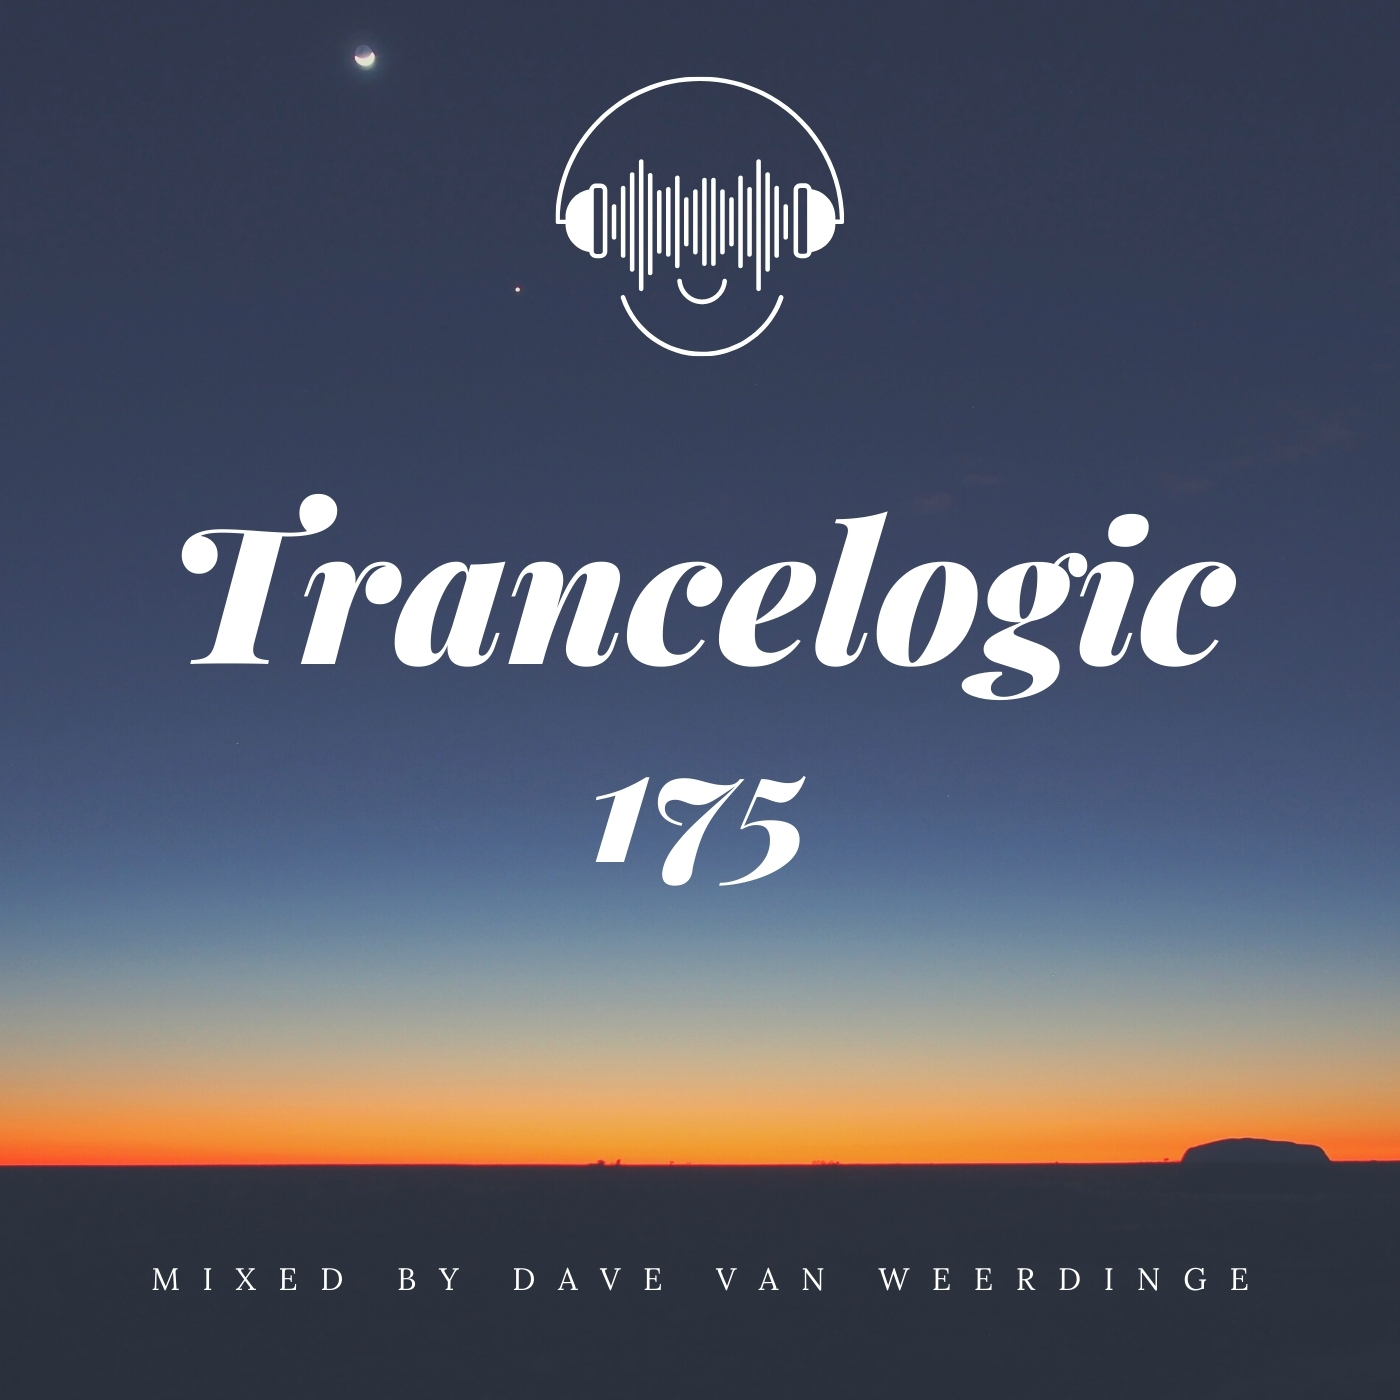 Trancelogic 175 by Dave van Weerdinge